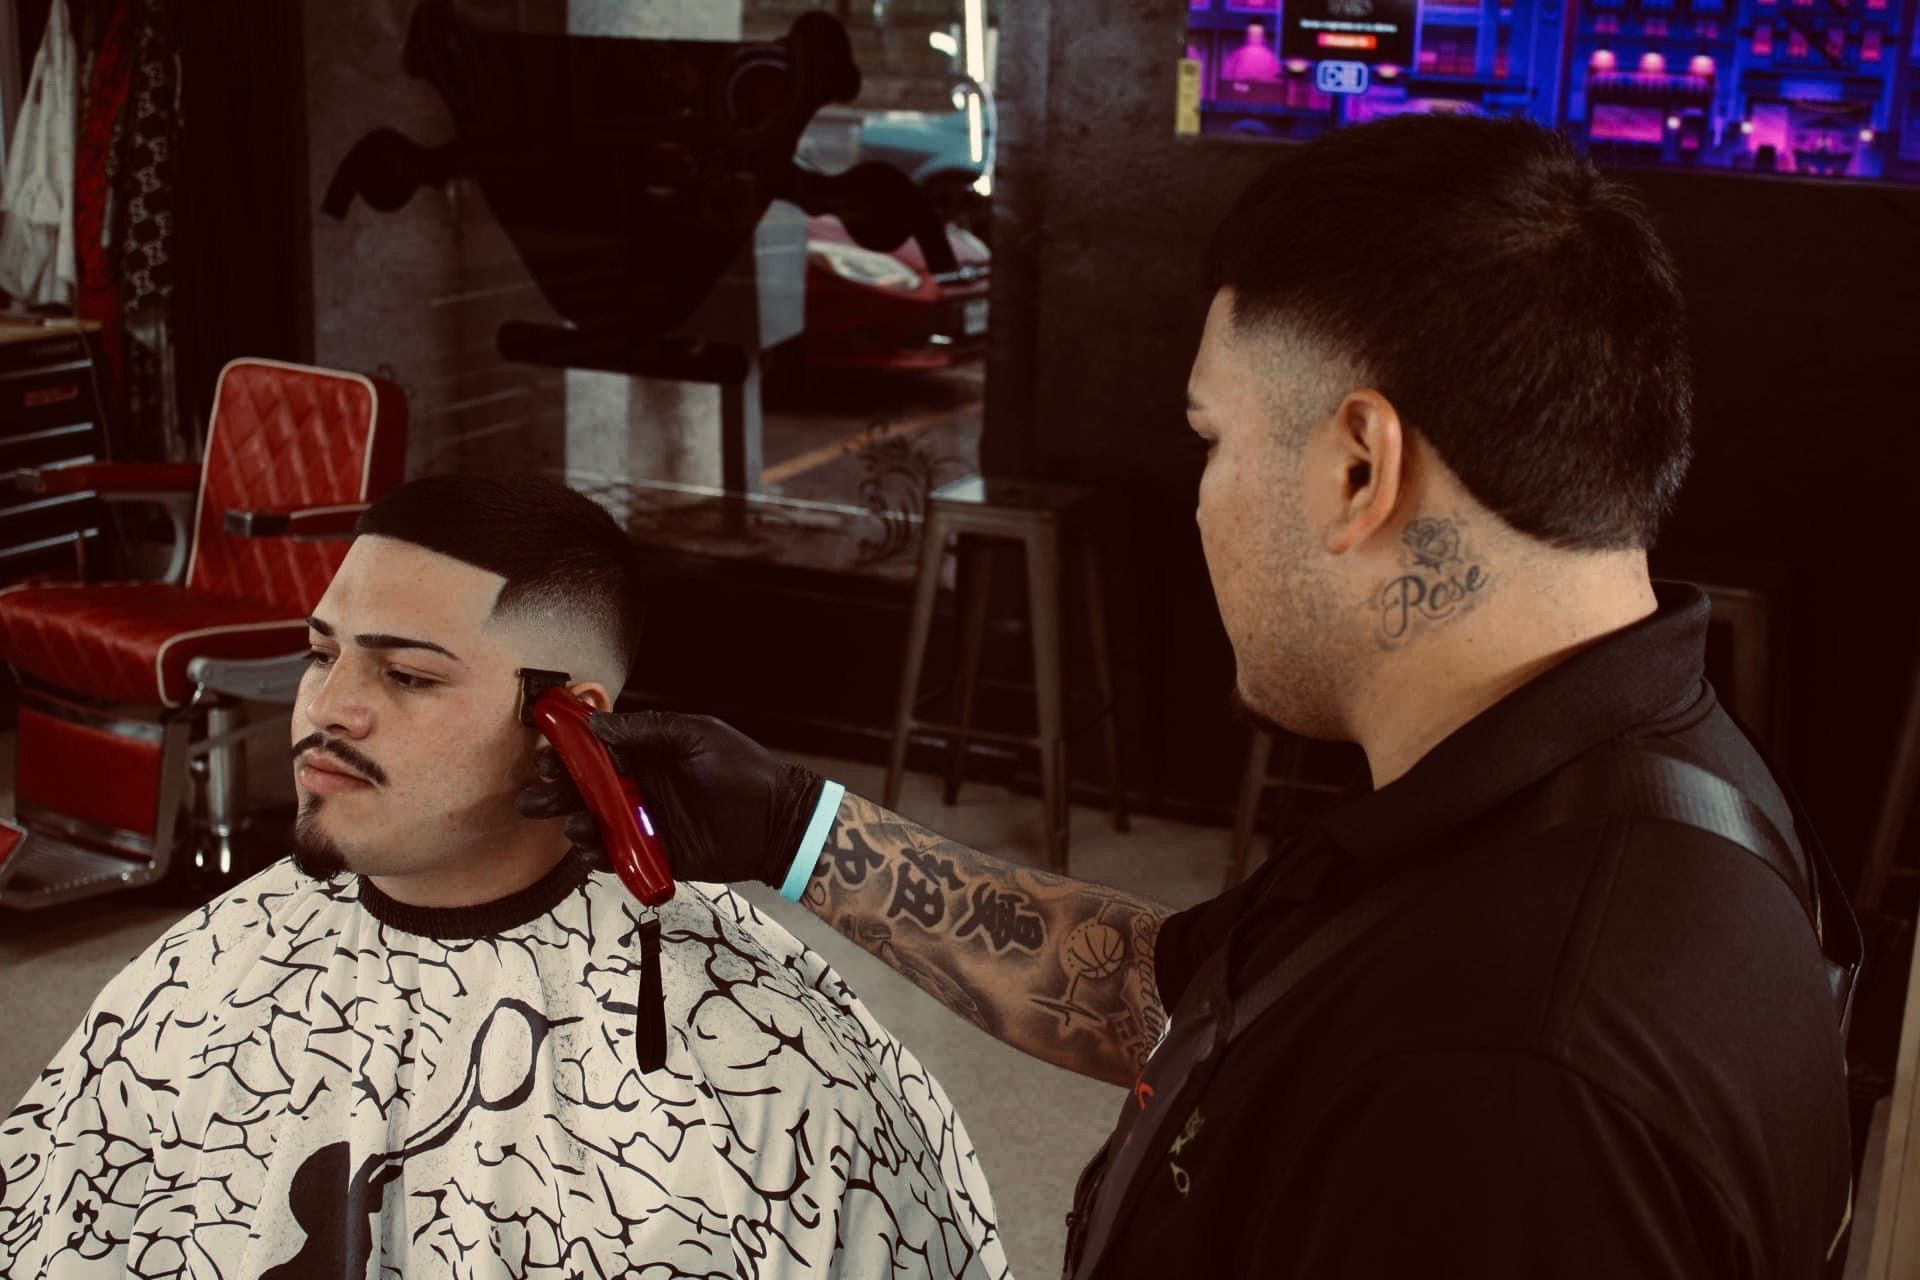 Gucci the barber